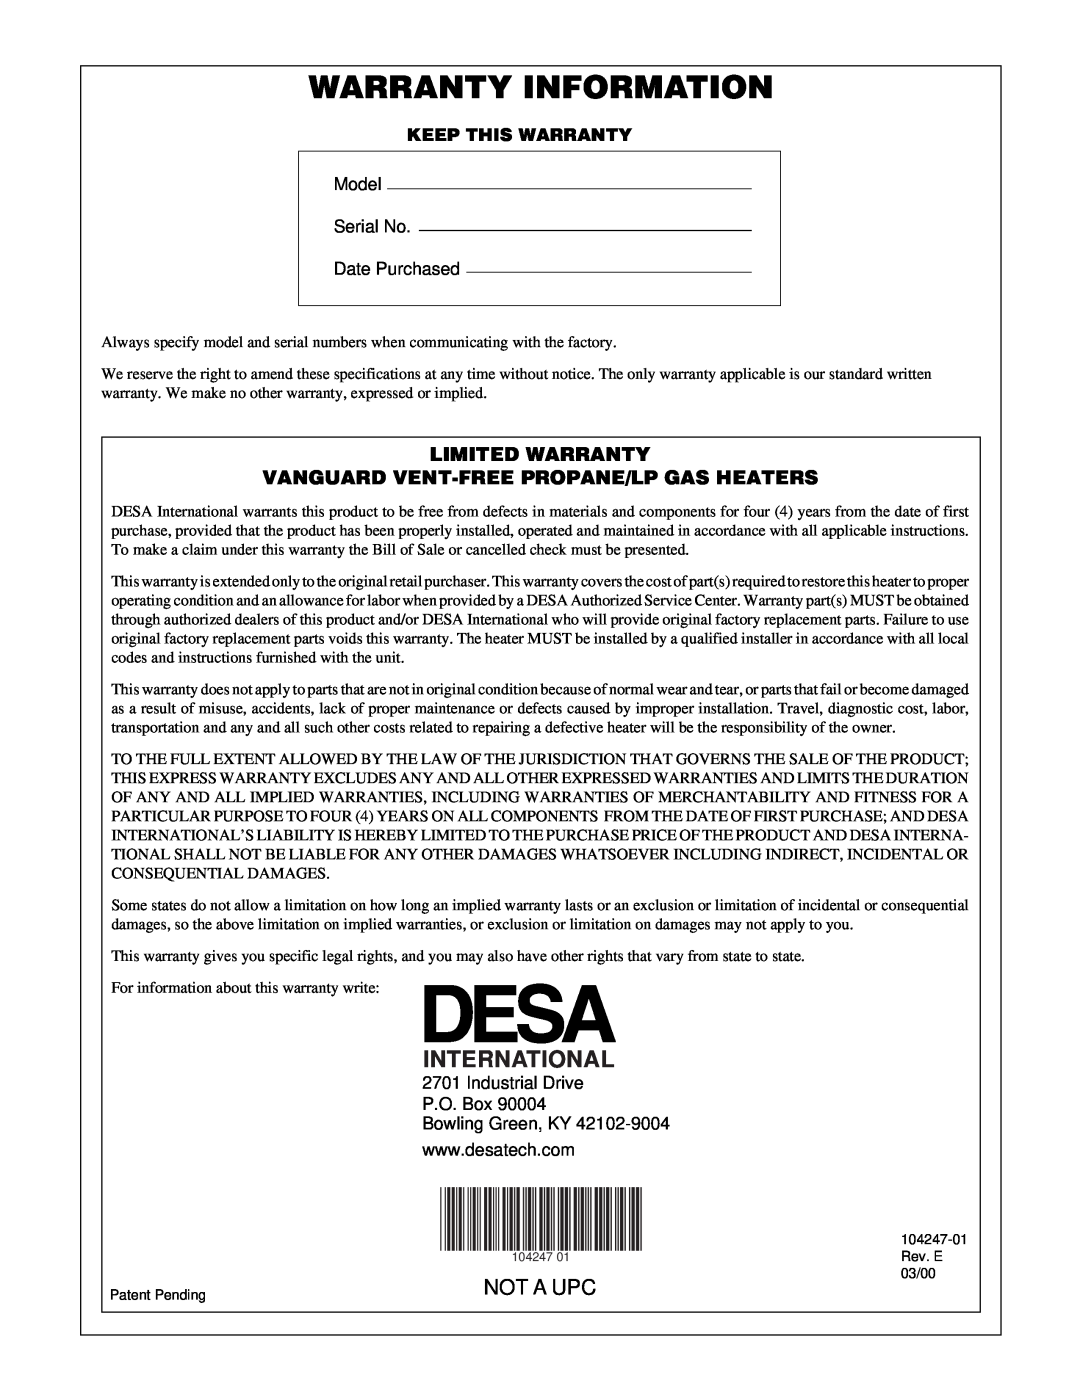 Desa VP2200ITB Warranty Information, International, Not A Upc, Limited Warranty, Vanguard Vent-Freepropane/Lp Gas Heaters 